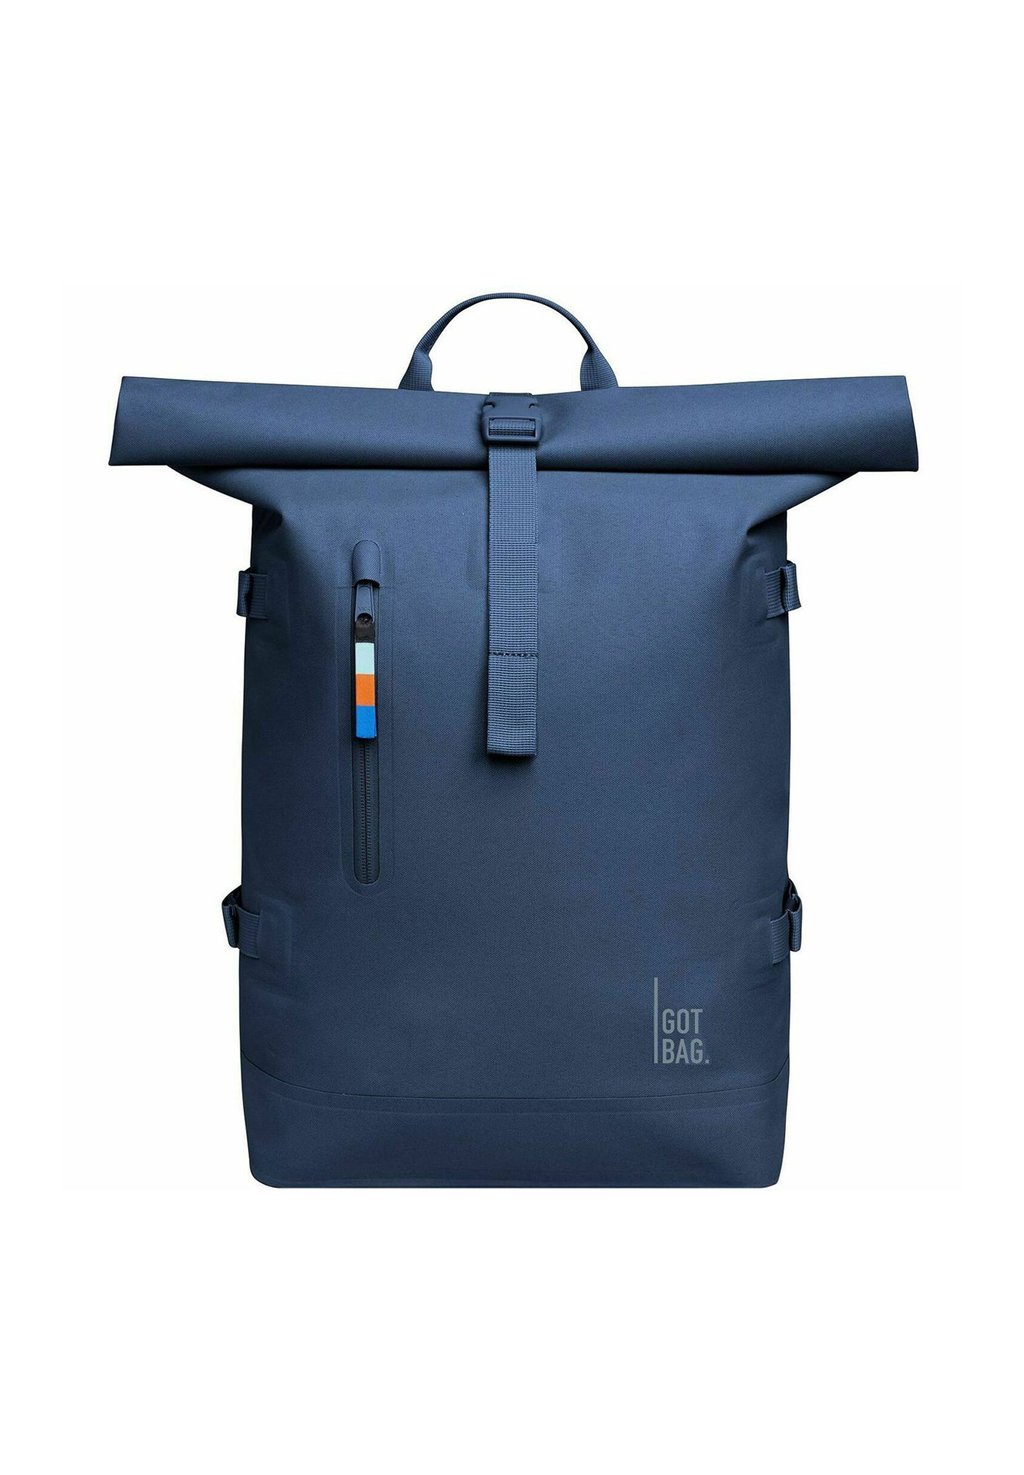 Рюкзак ROLLTOP 2.0 GOT BAG, цвет ocean blue